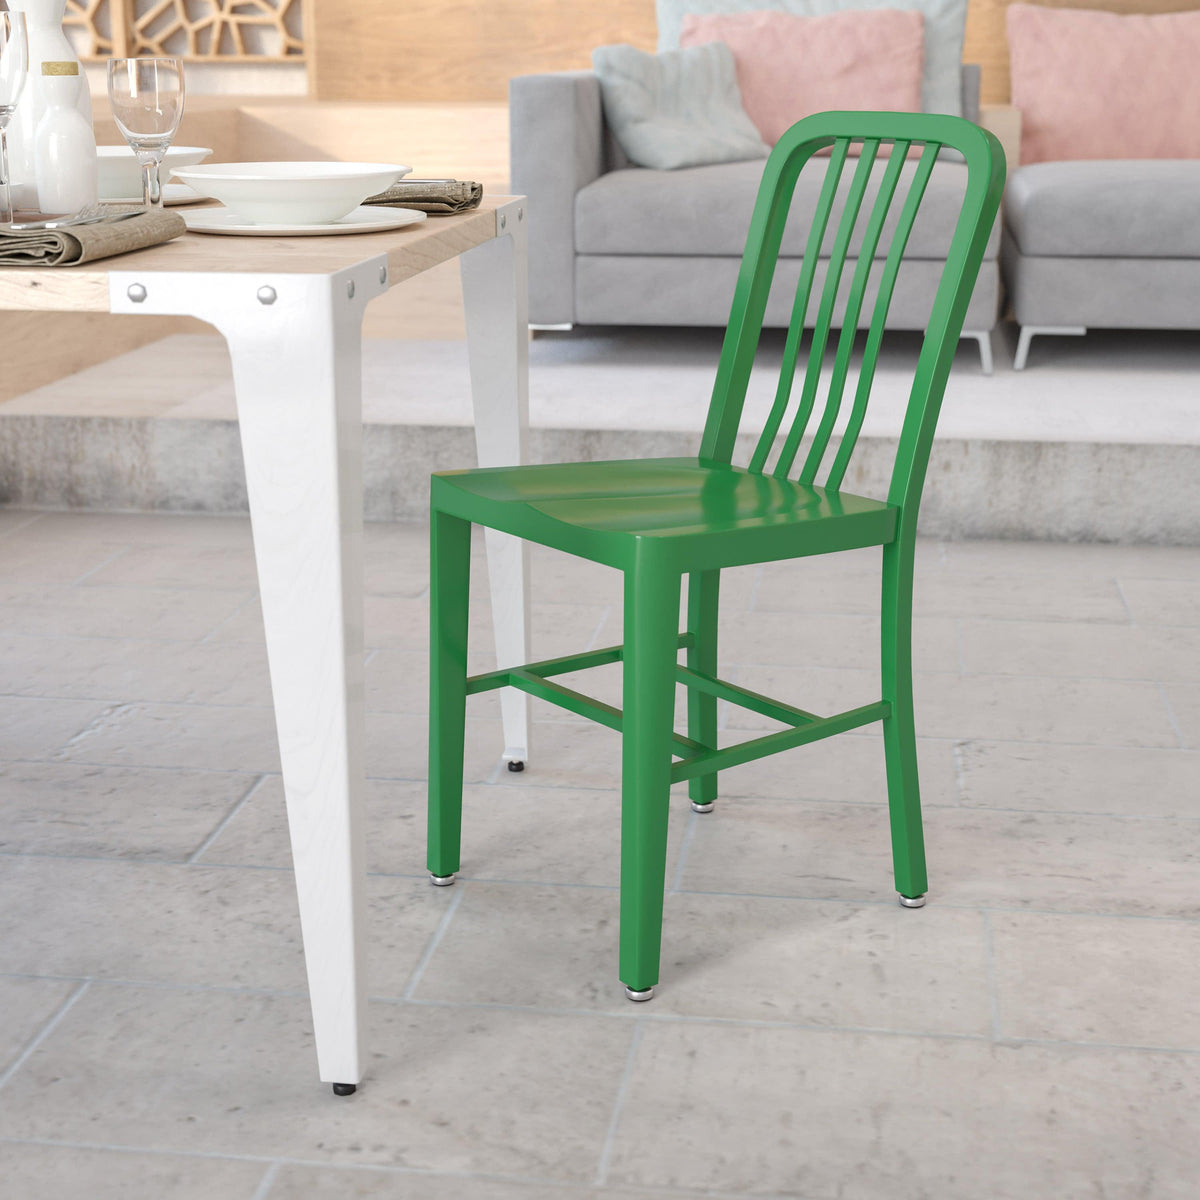 Green |#| Green Metal Indoor-Outdoor Chair - Kitchen Chair - Restaurant Seating